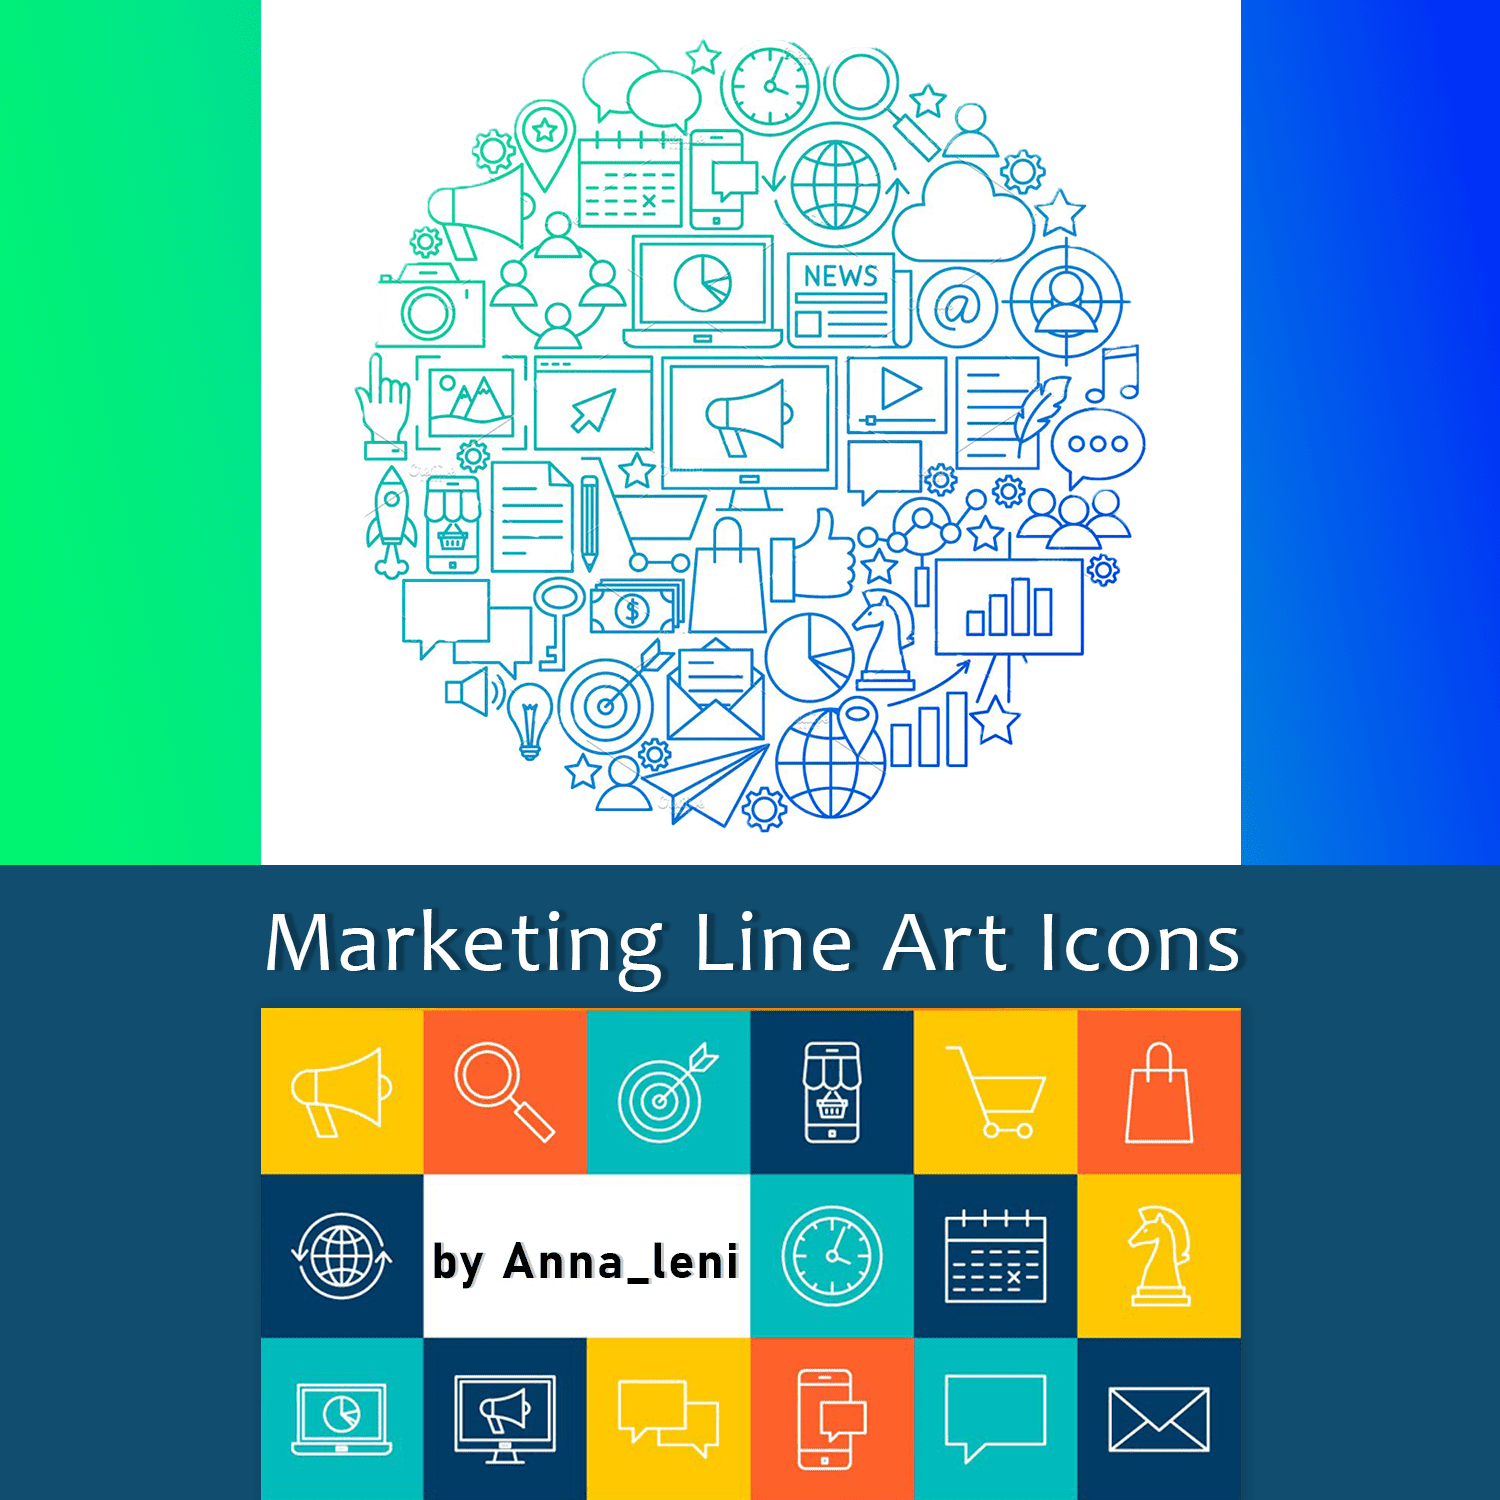 Marketing Line Art Icons.